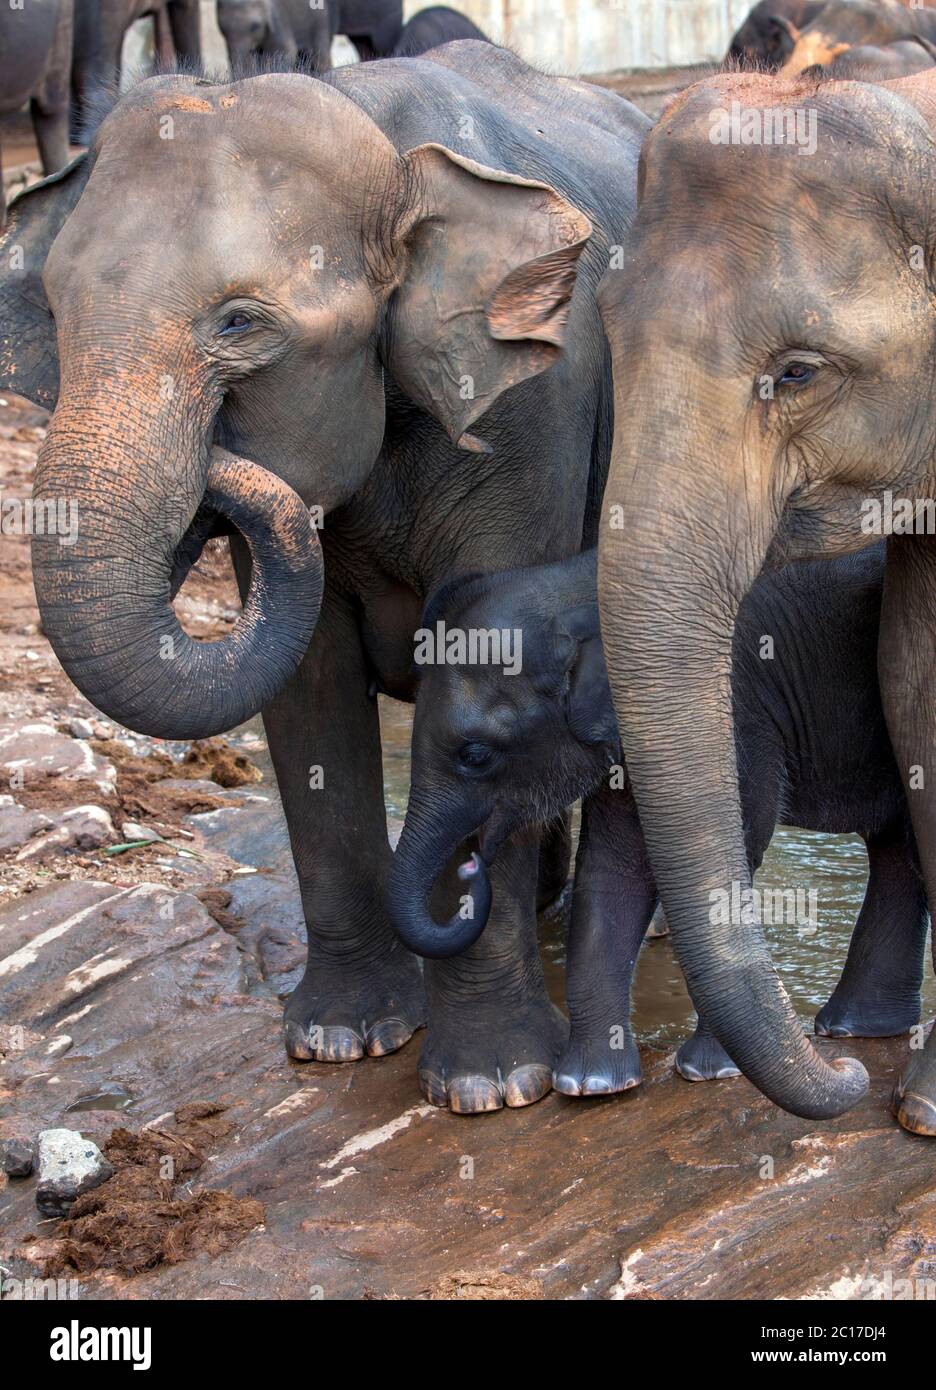 A elephant calf seeks security between two adult elephants at the Maha Oya River. The elephants are from the Pinnawala Elephant Orphanage in Sri Lanka Stock Photo